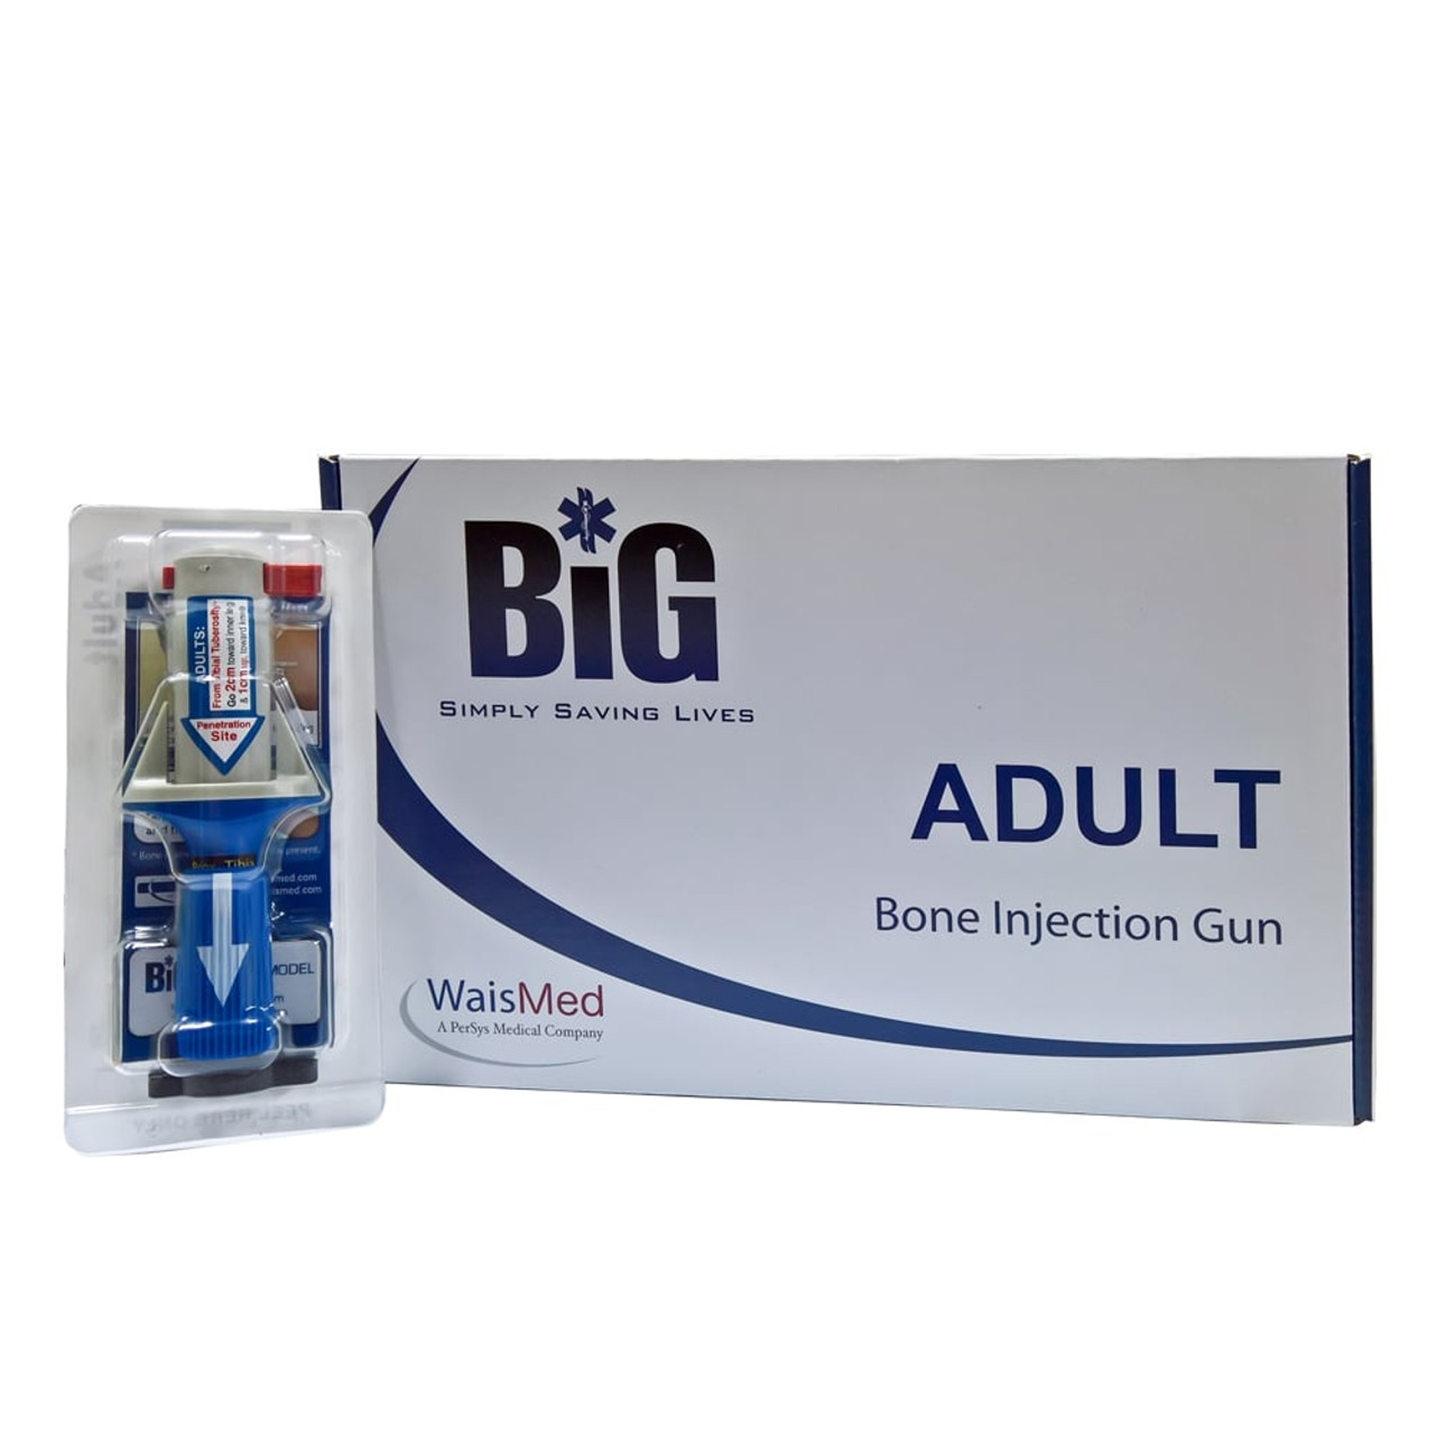 Bone Injection Gun (B.I.G) - 15g Adult Version